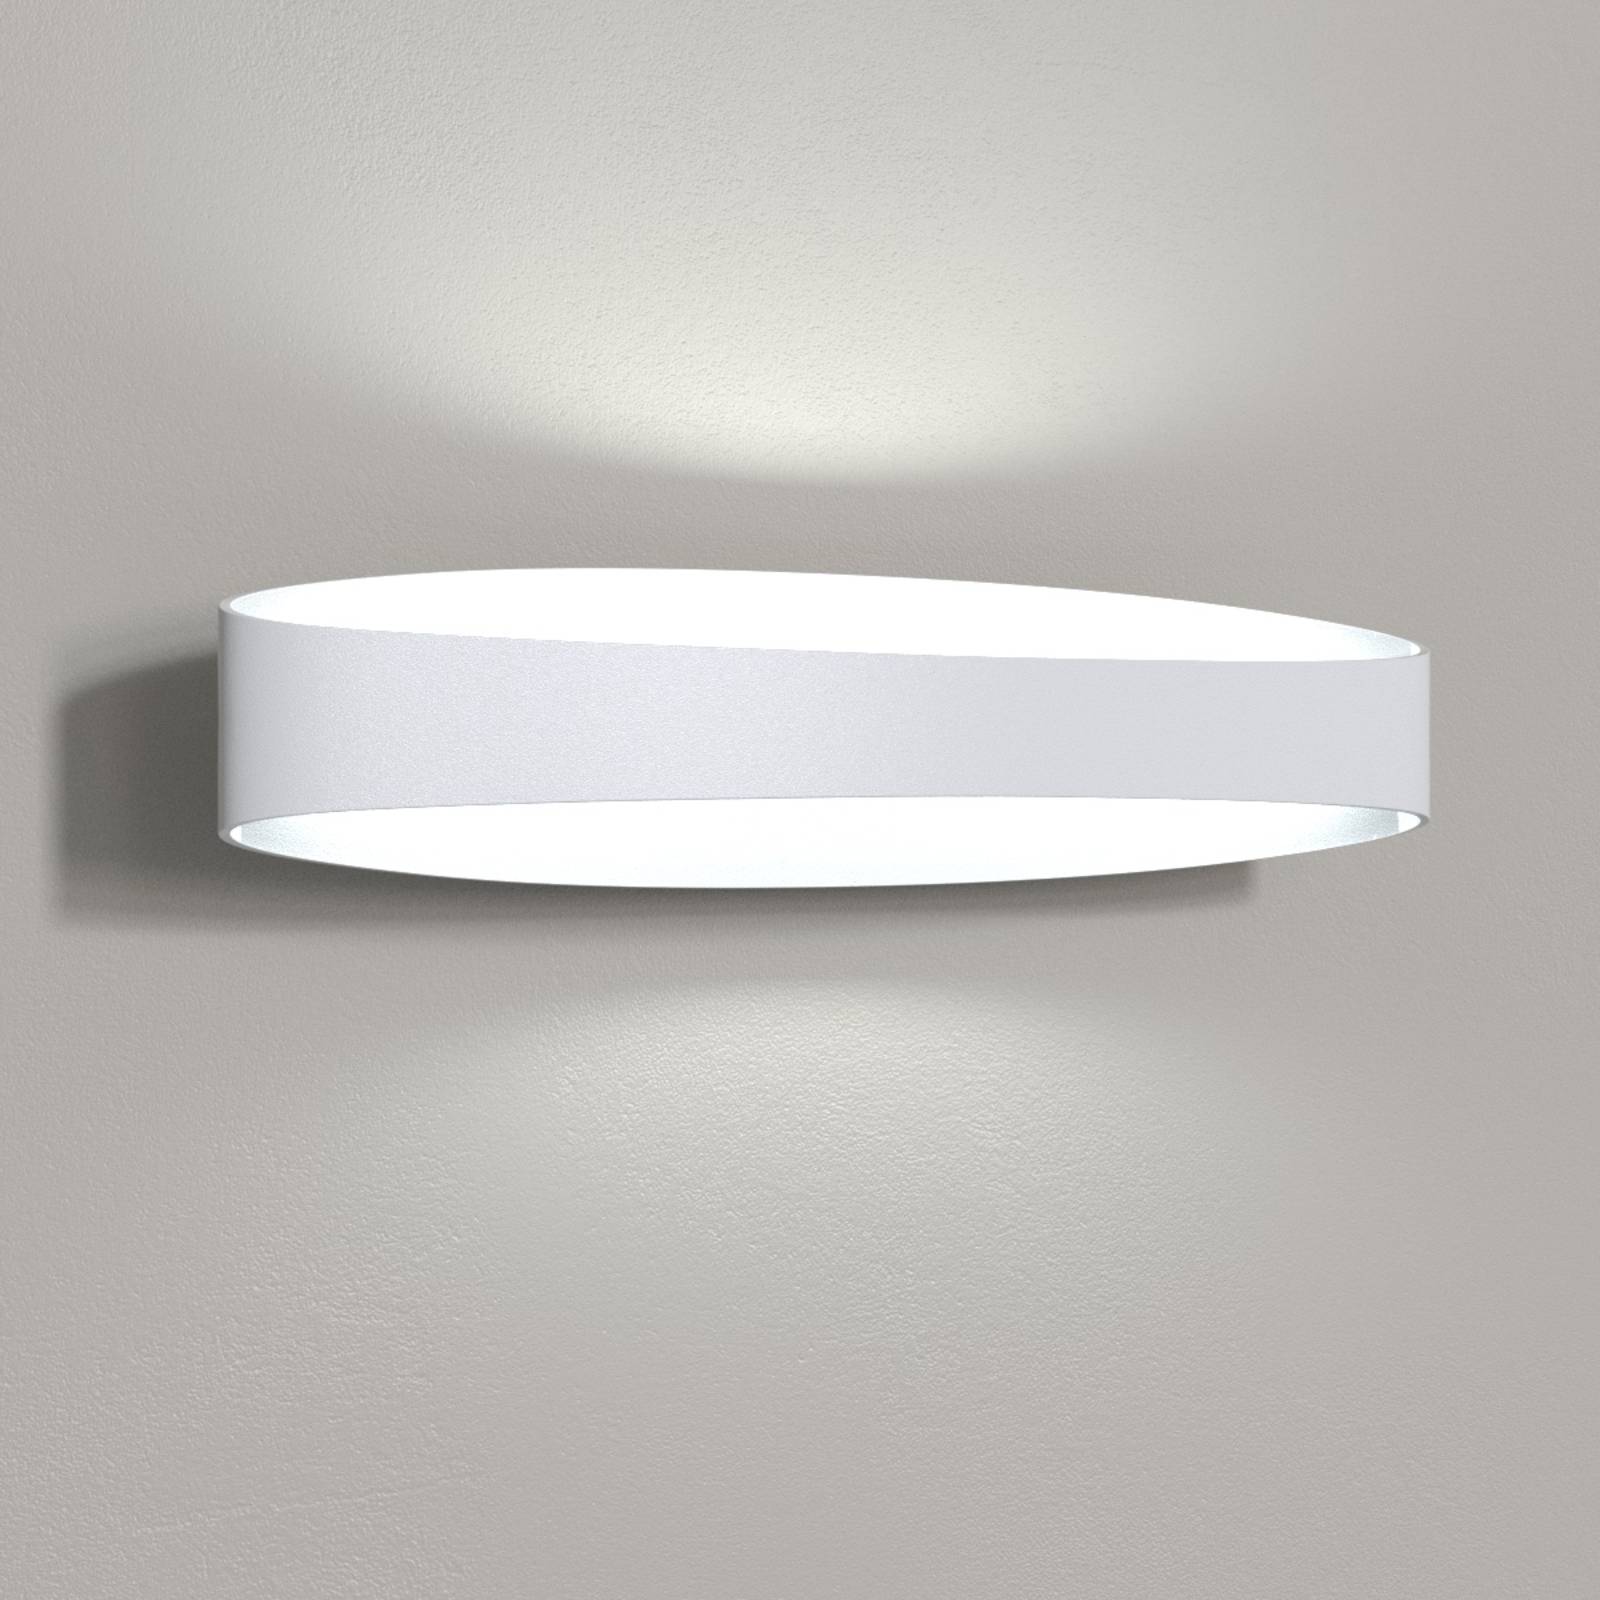 Ailati Bridge - LED-Wandlampe aus Aludruckguss